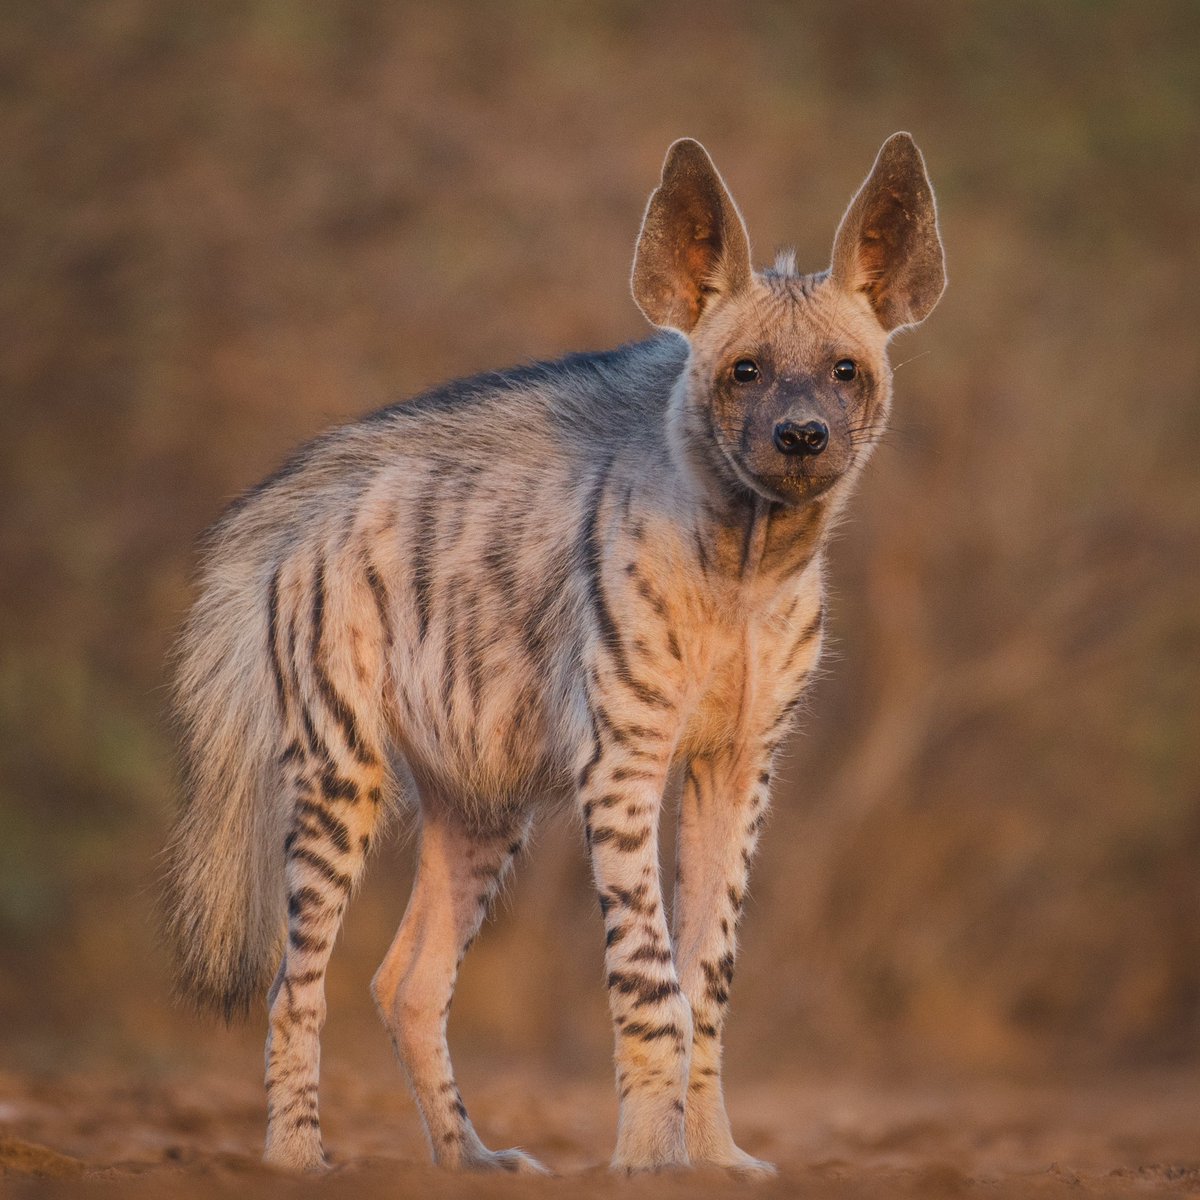 ‘ The Alpha ‘

#Hyena #stripedhyena #IncredibleIndia #bbcearth #gujarat #lrk #natgeoindia #IndiAves #wildlife #photography #india #Nikon